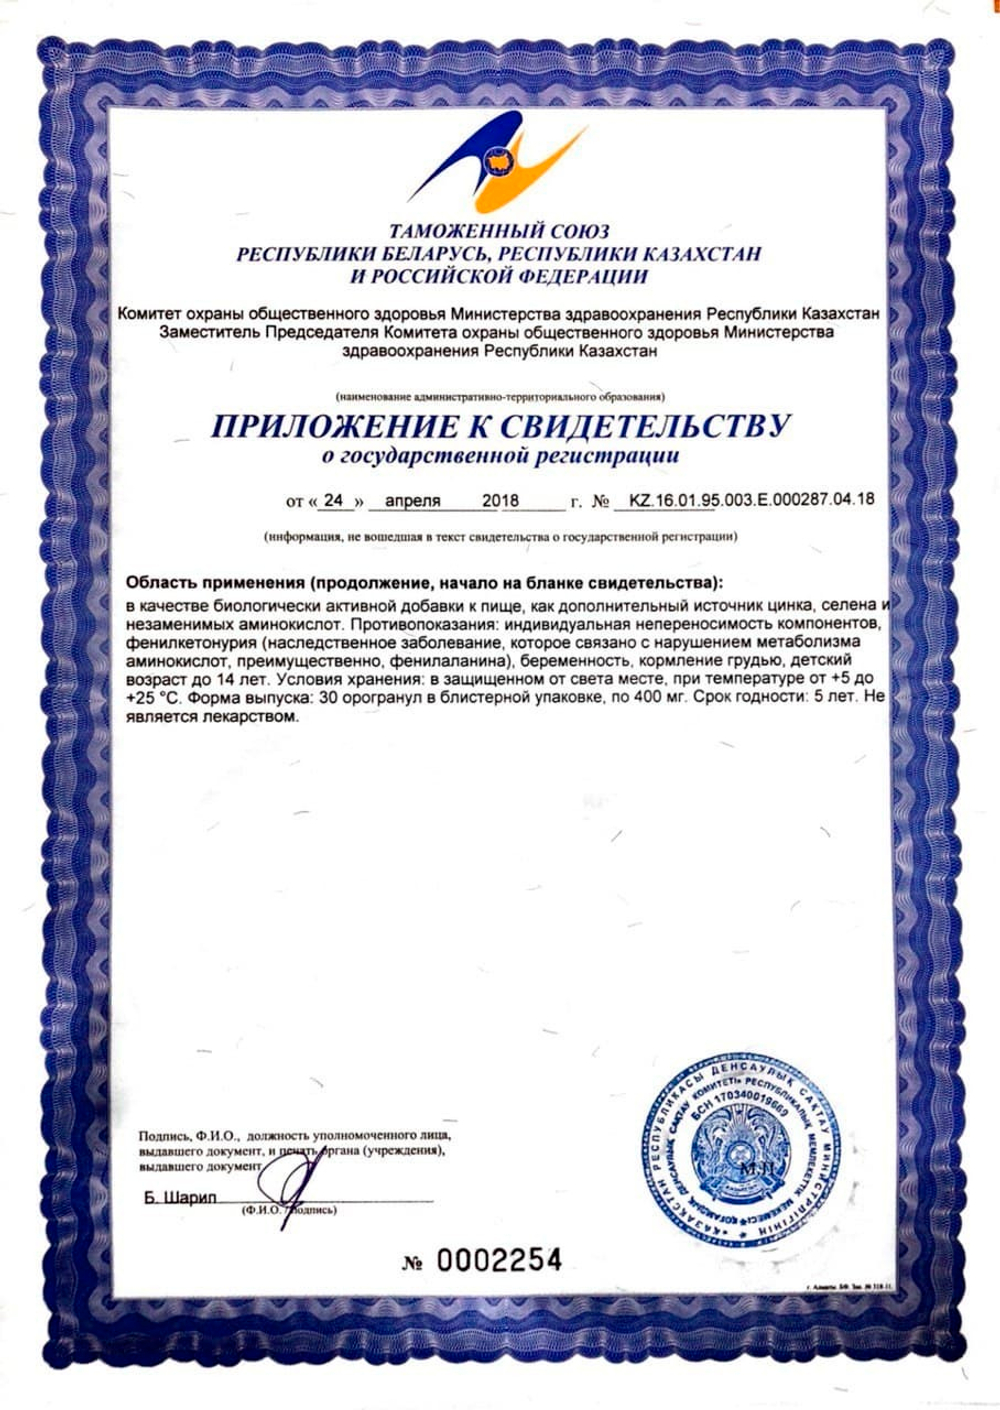 Сертификат эпитид эпиталамин пептид эпифиза для мелатонина